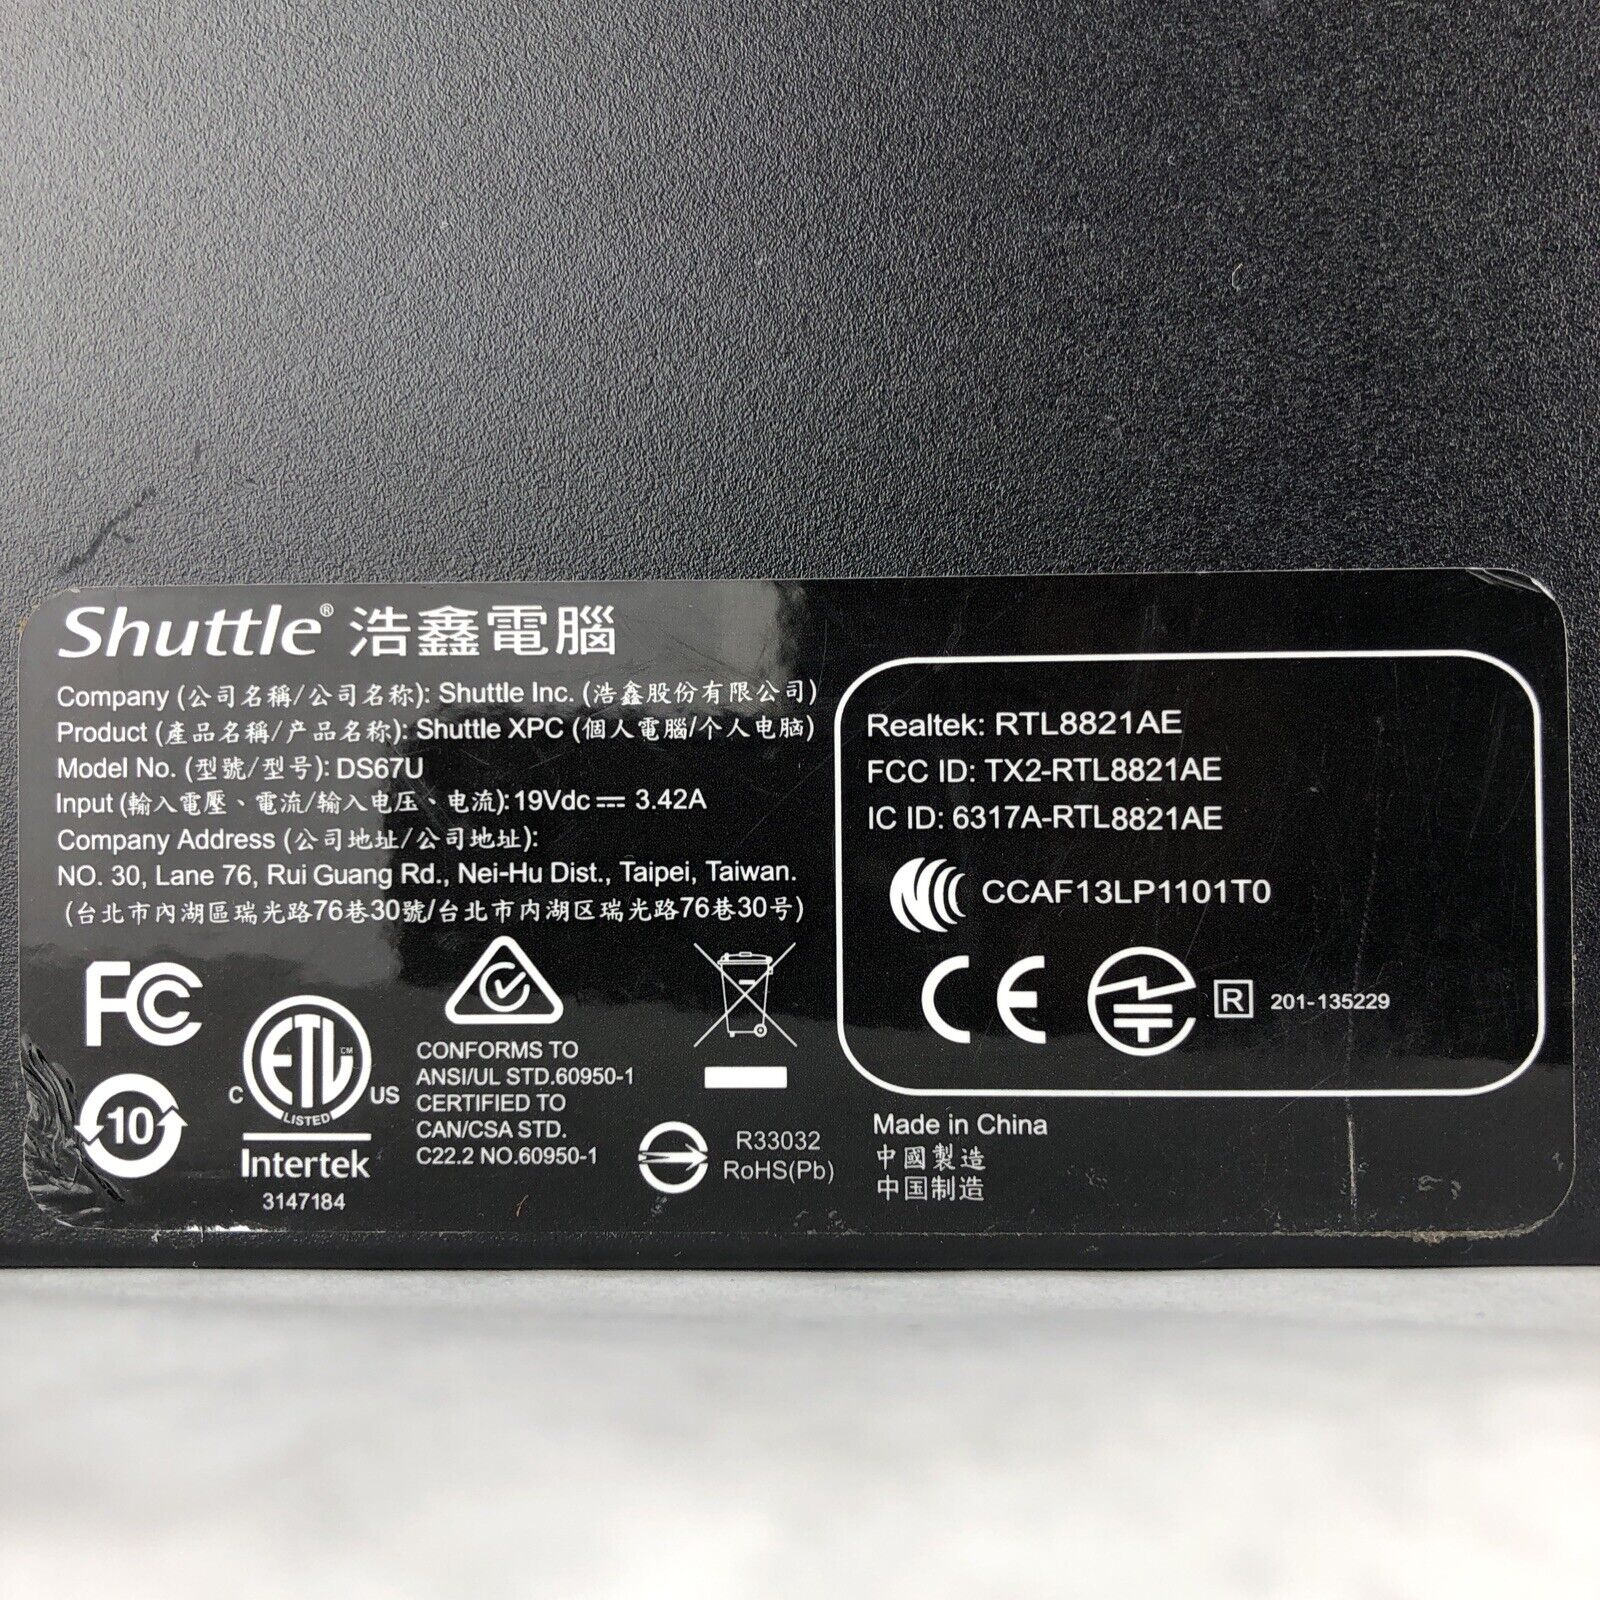 Shuttle DS67U Fanless Mini PC Intel Celeron 3855U 1.60GHz 4GB RAM No HDD NO OS